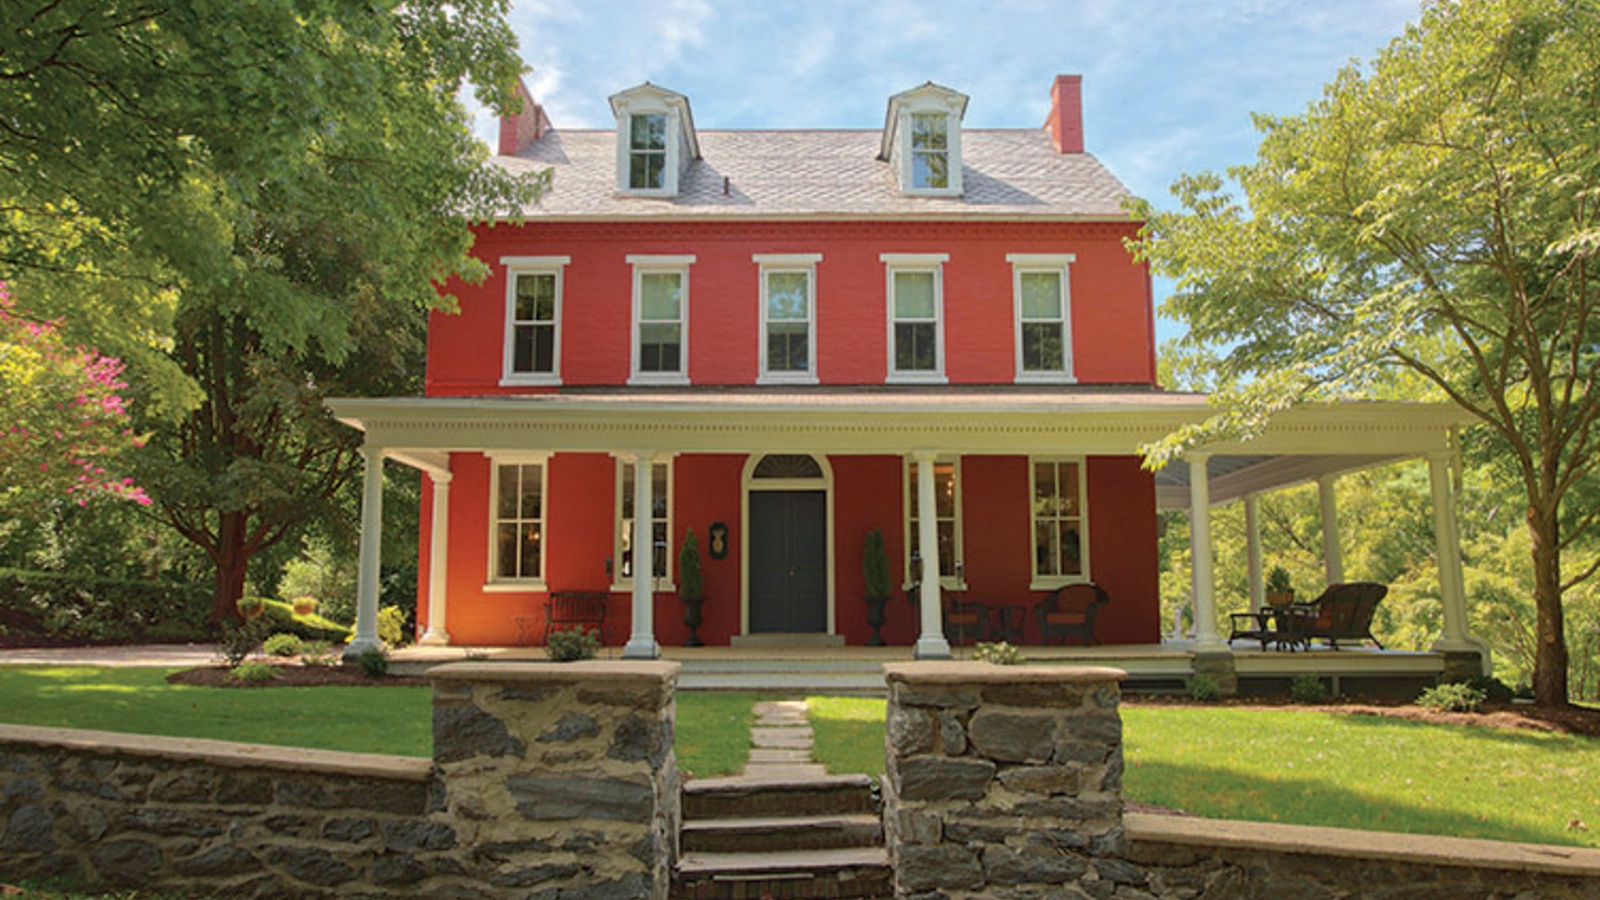 The Hollinger House, Pennsylvania